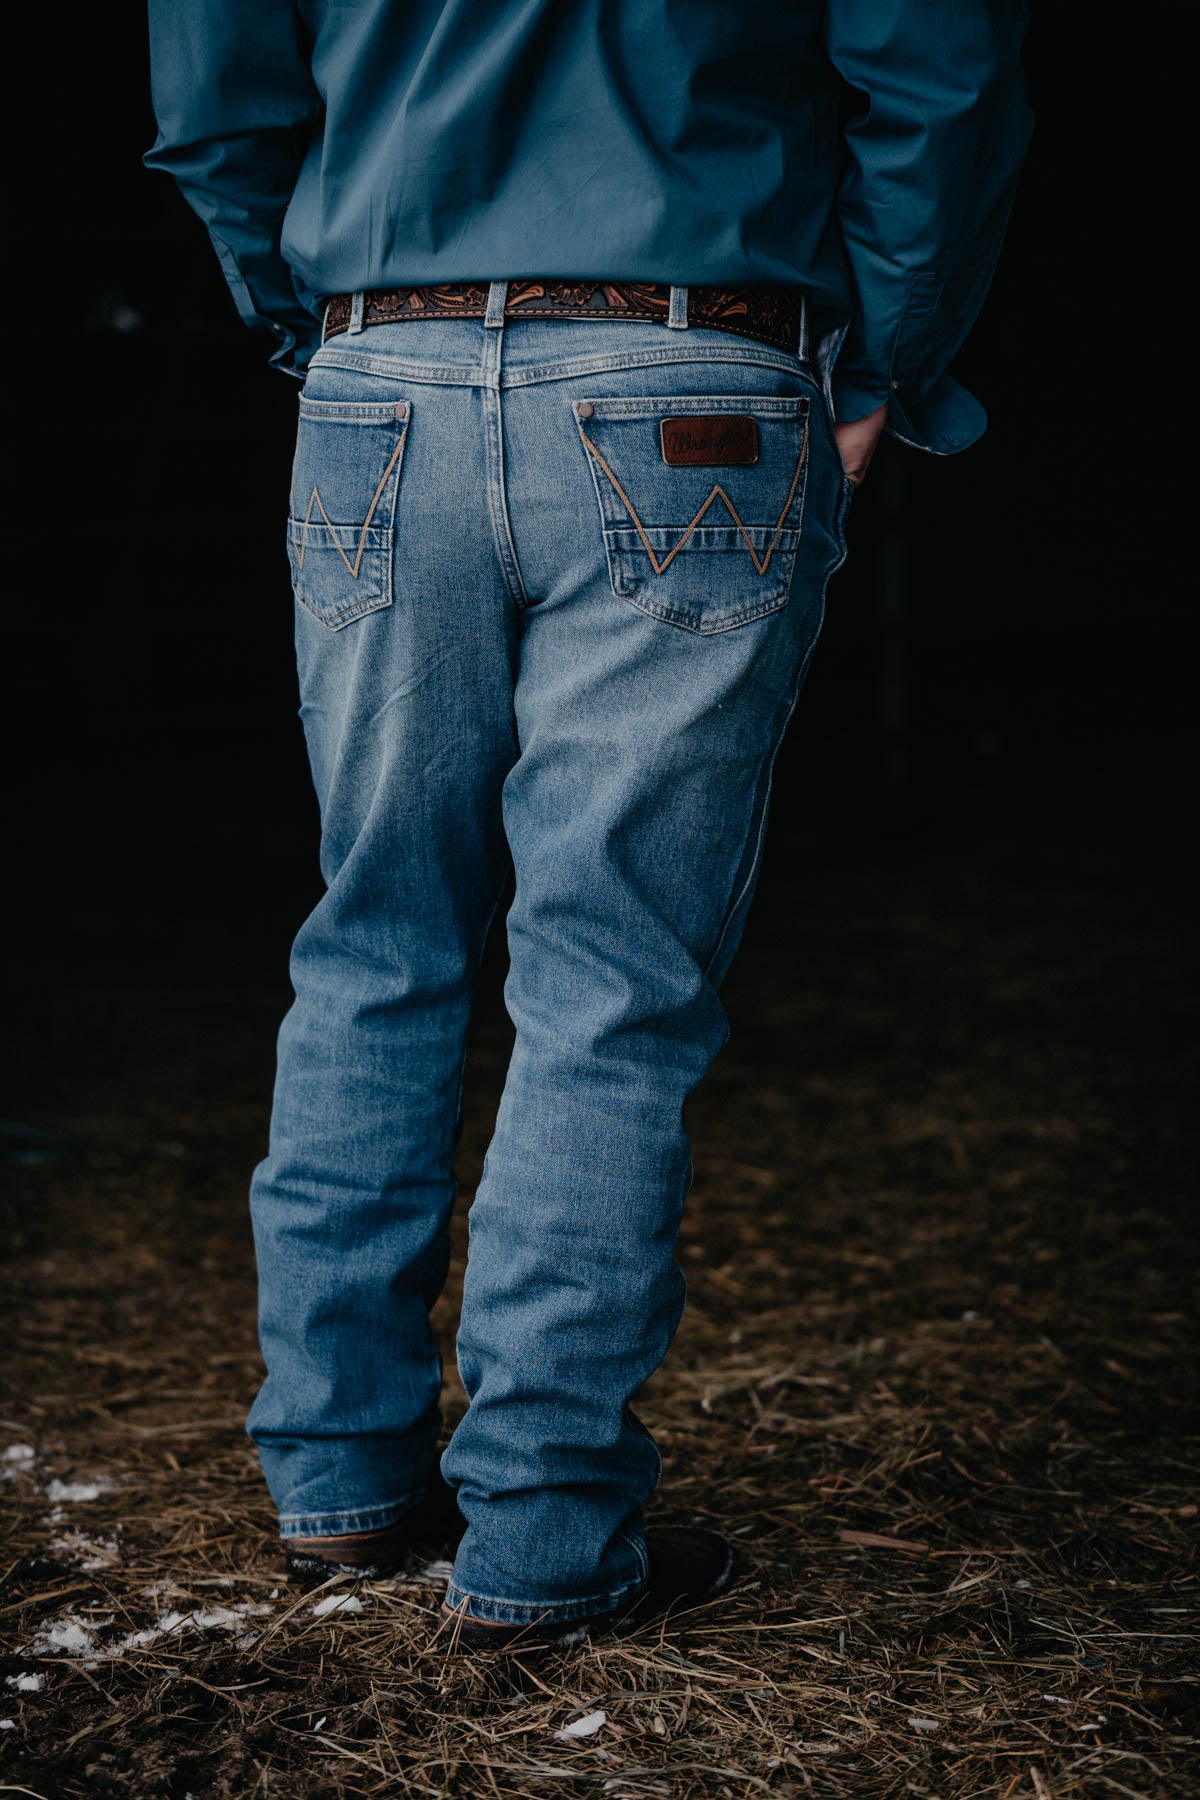 Beau' Men's Retro Wrangler Slim Bootcut Jeans